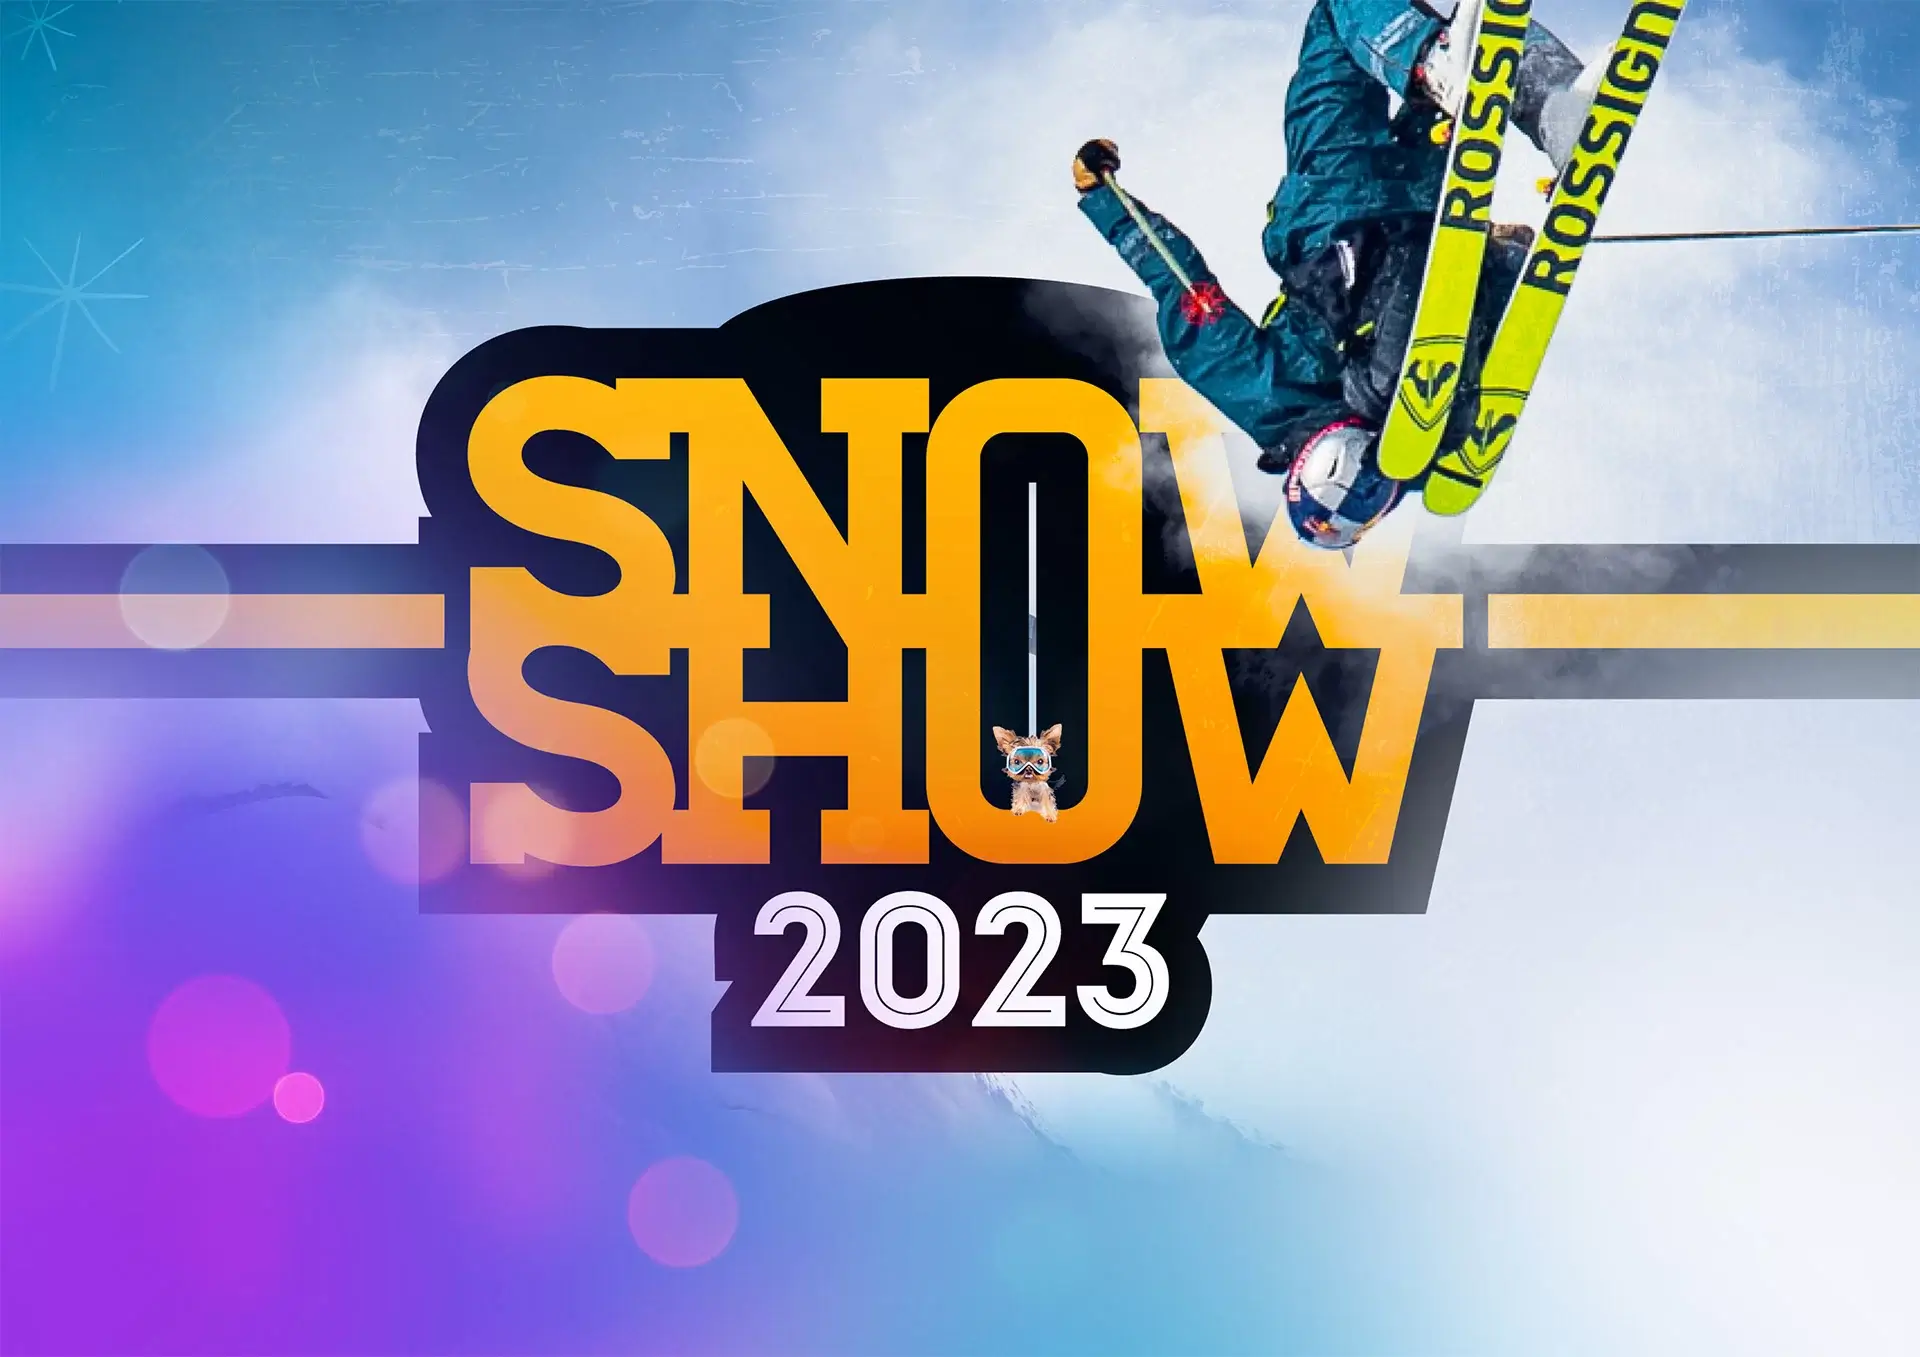 Snow show 2023